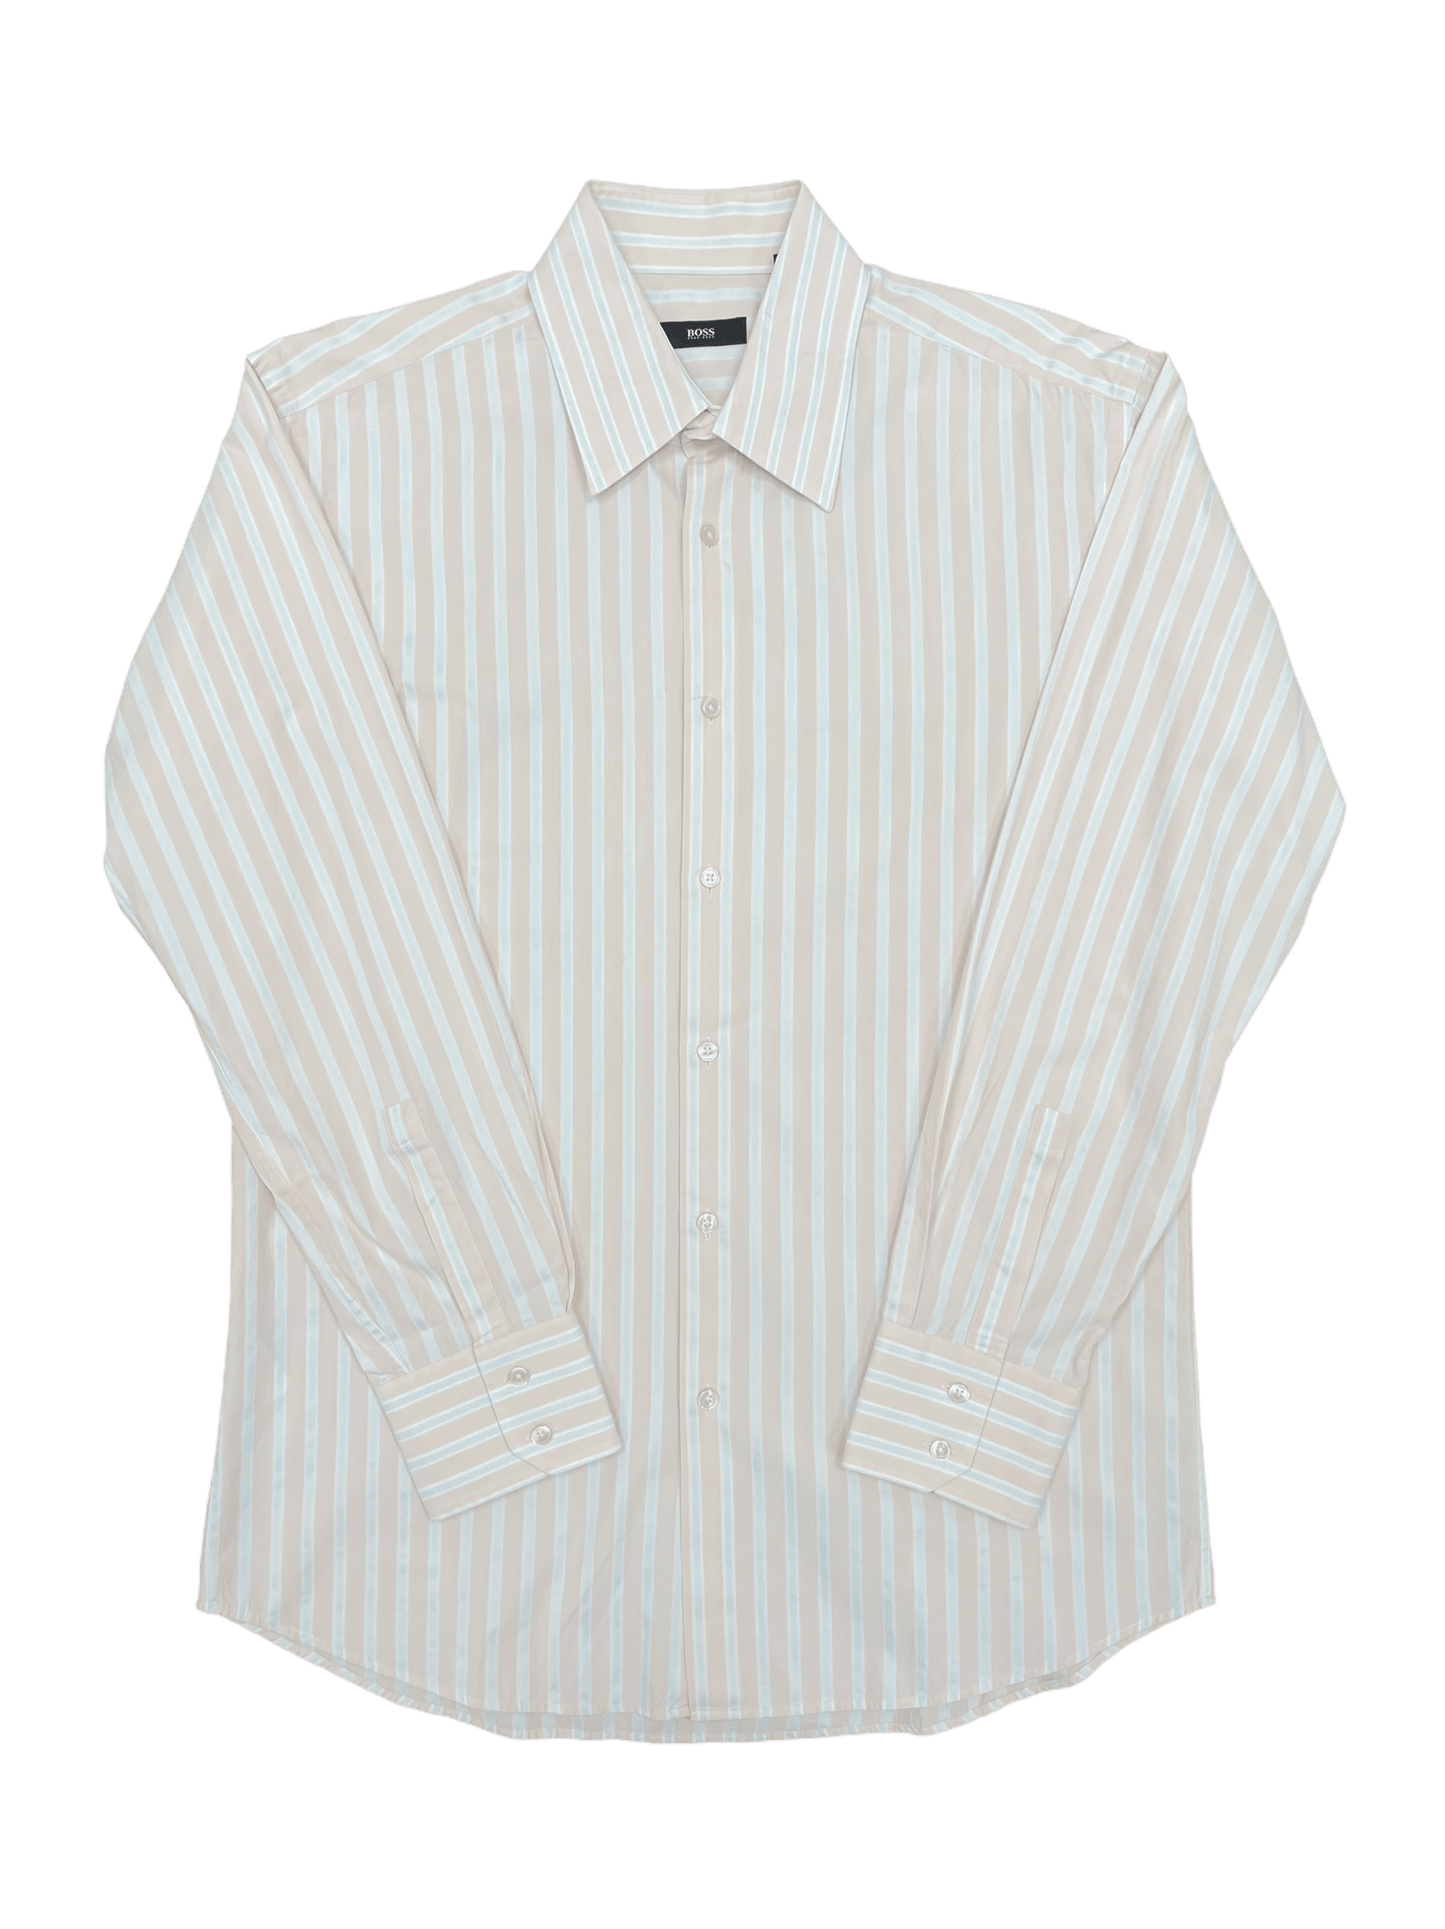 Hugo Boss Stripe Dress Shirt Tan, Light Blue, White—Genuine Design luxury consignment 